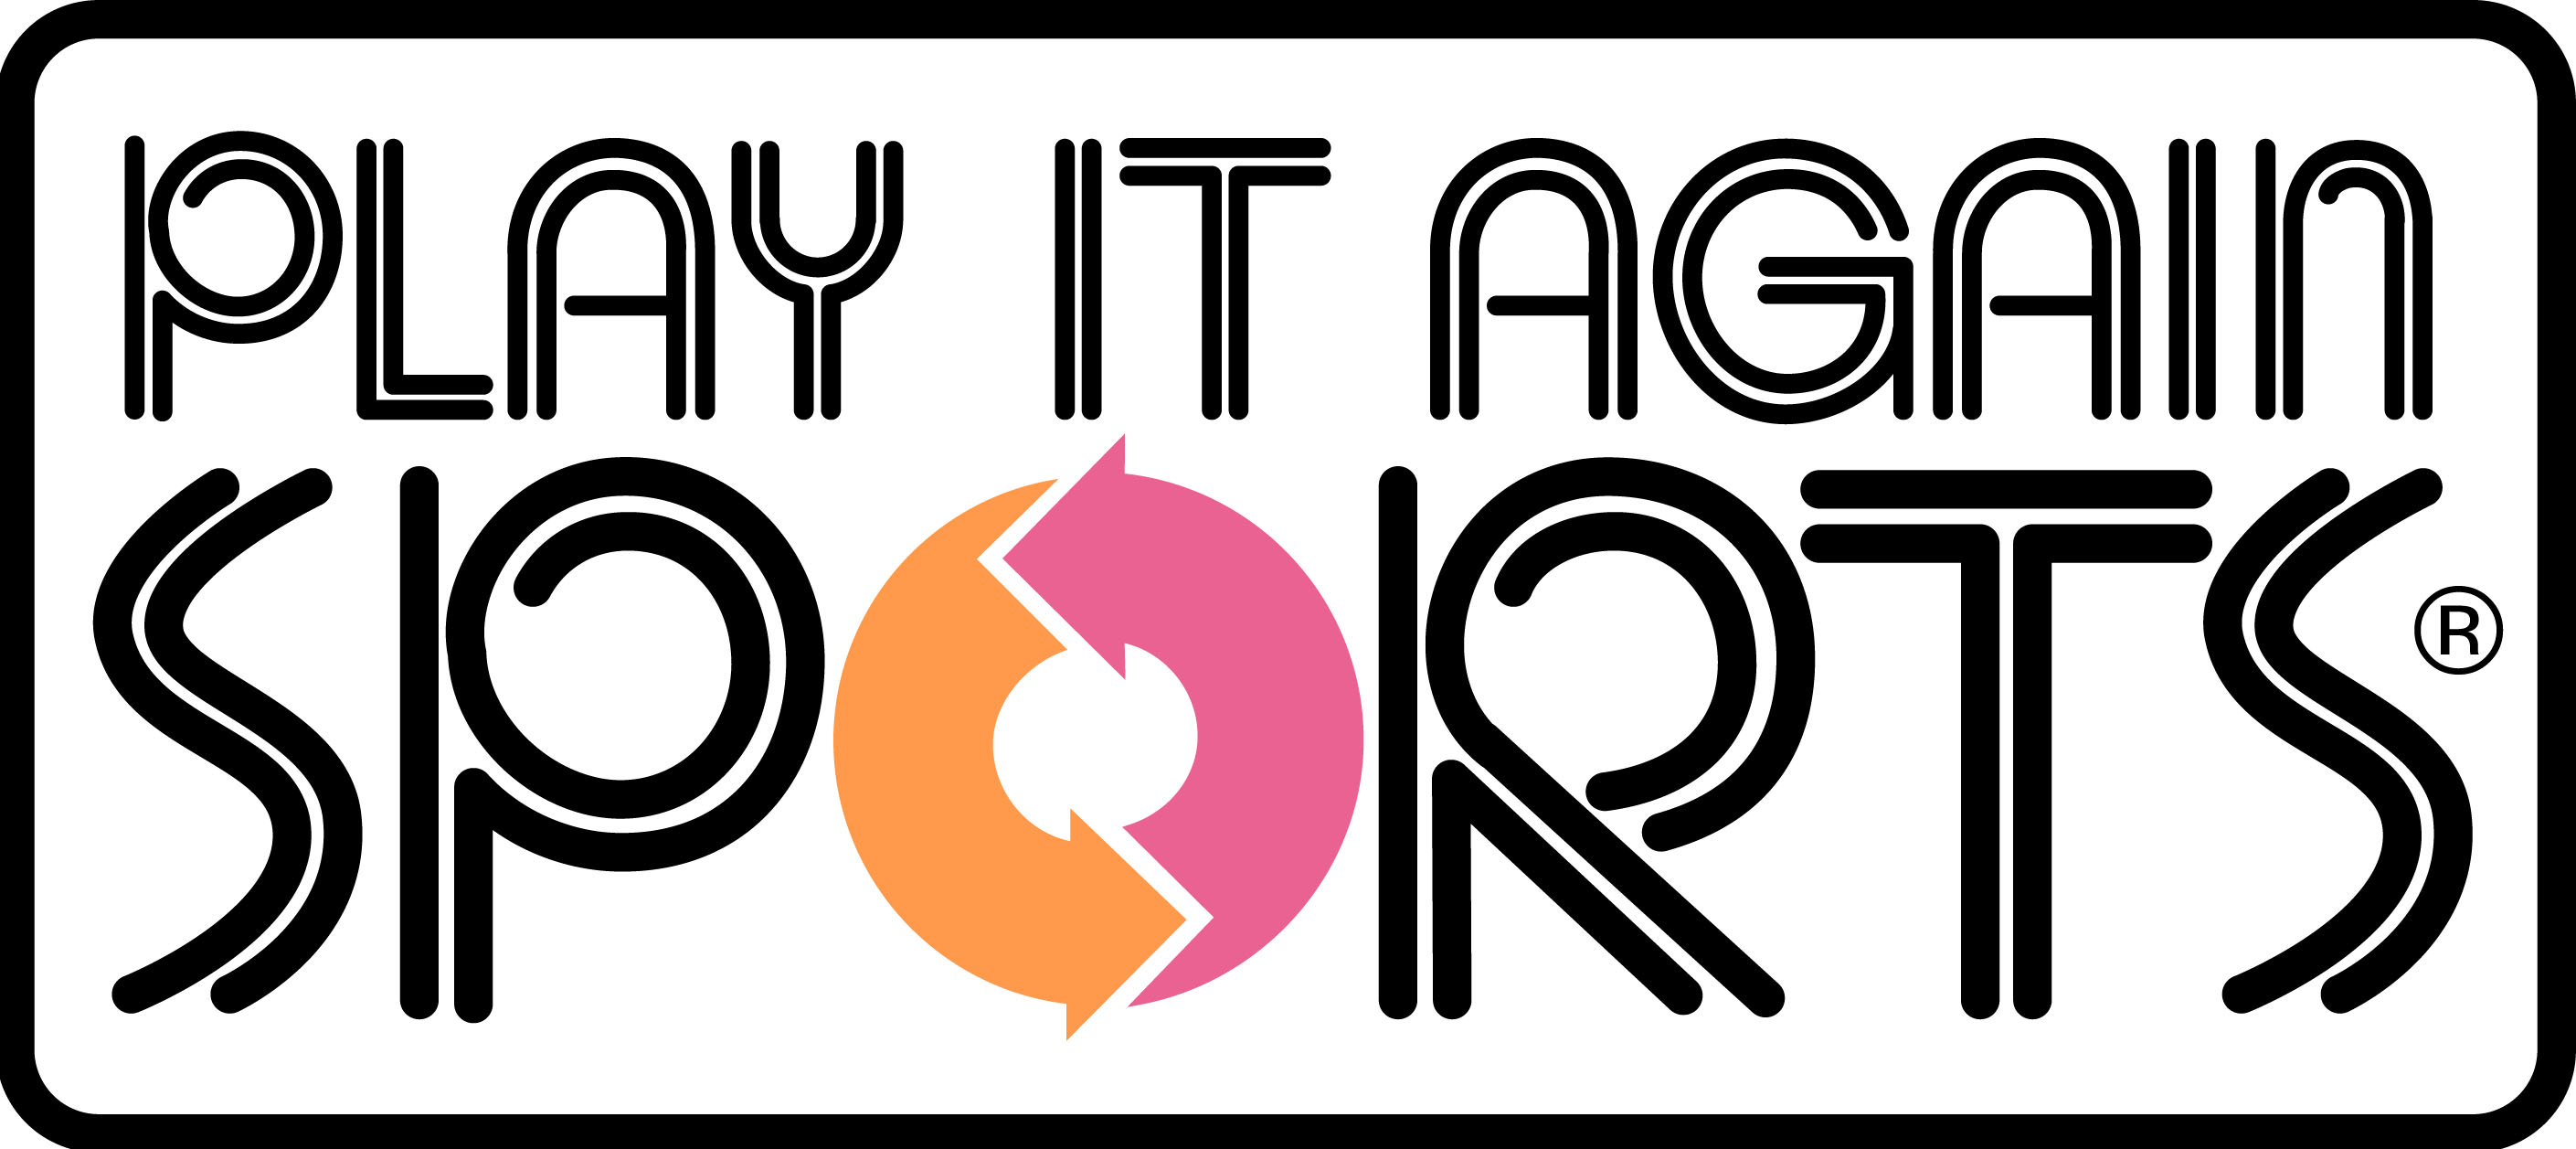 Play It Again Sports logo.jpg